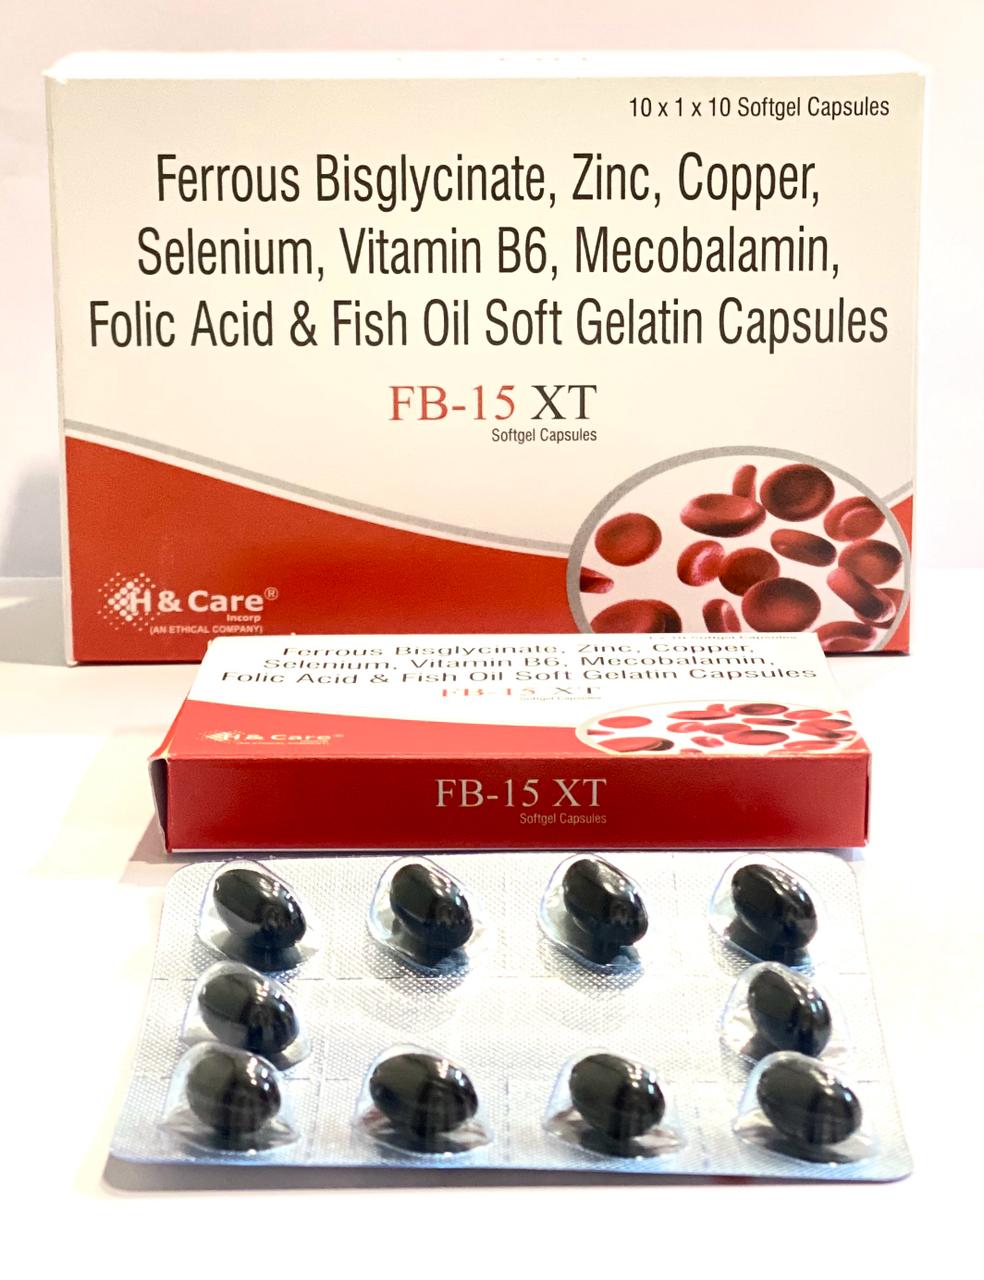 FB-15 XT: Ferrous Bisglycinate, Zinc, Copper,Selenium, Vitamin B6, Mecobalamin, Folic Acid, Fish oil soft gelatin capsules